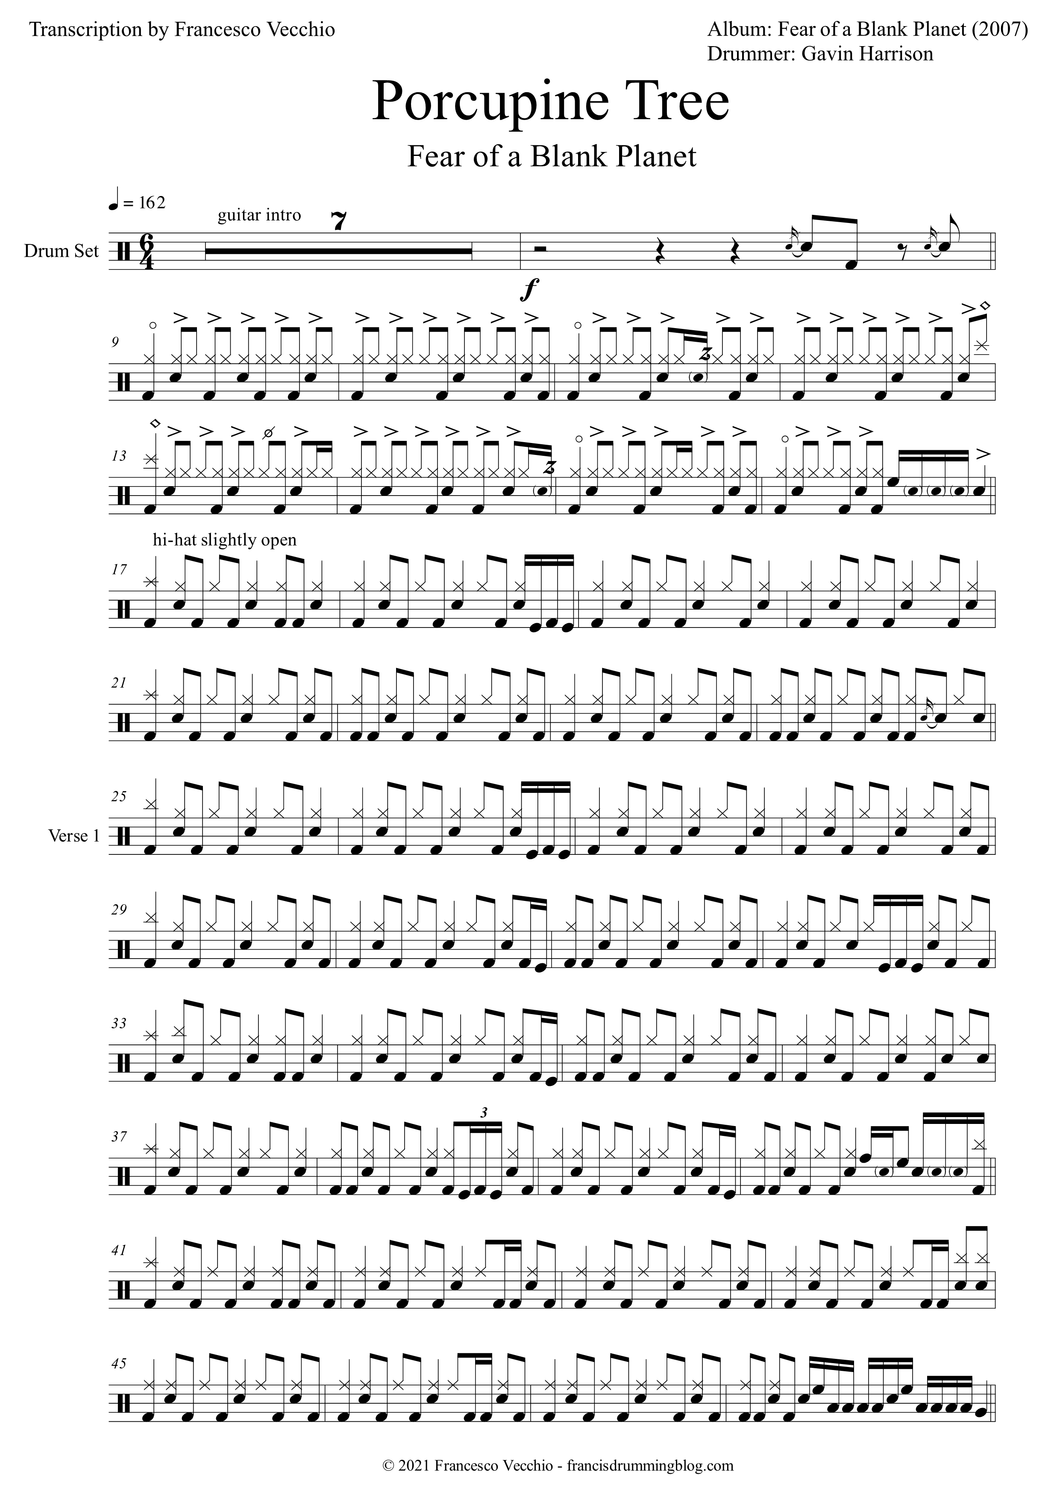 Fear of a Blank Planet - Porcupine Tree - Full Drum Transcription / Drum Sheet Music - FrancisDrummingBlog.com